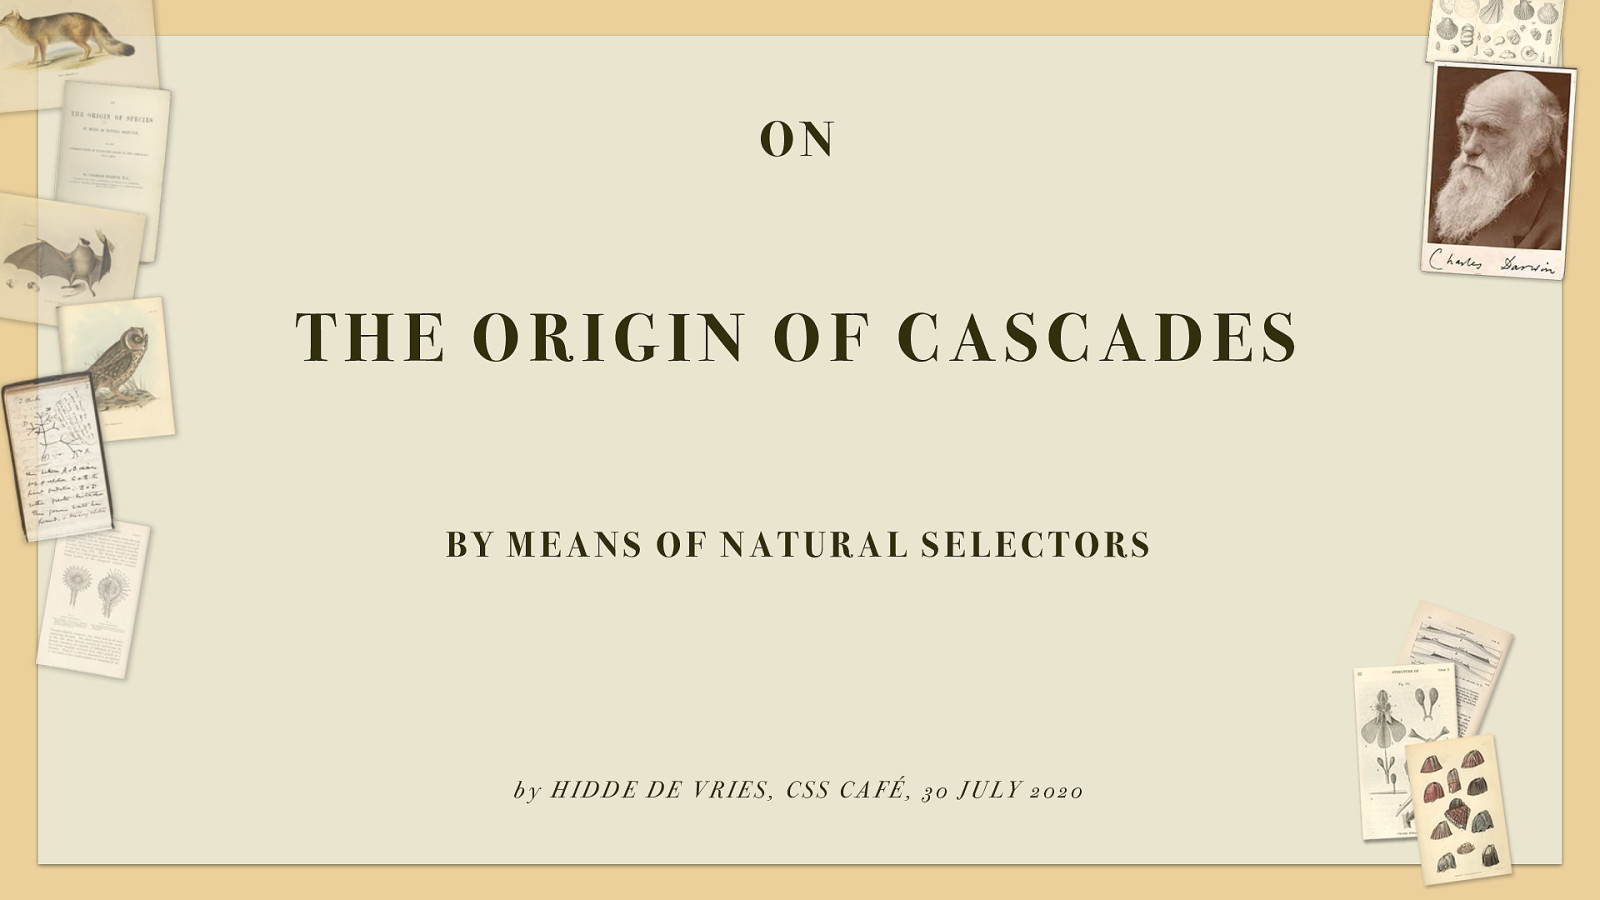 On the origin of cascades